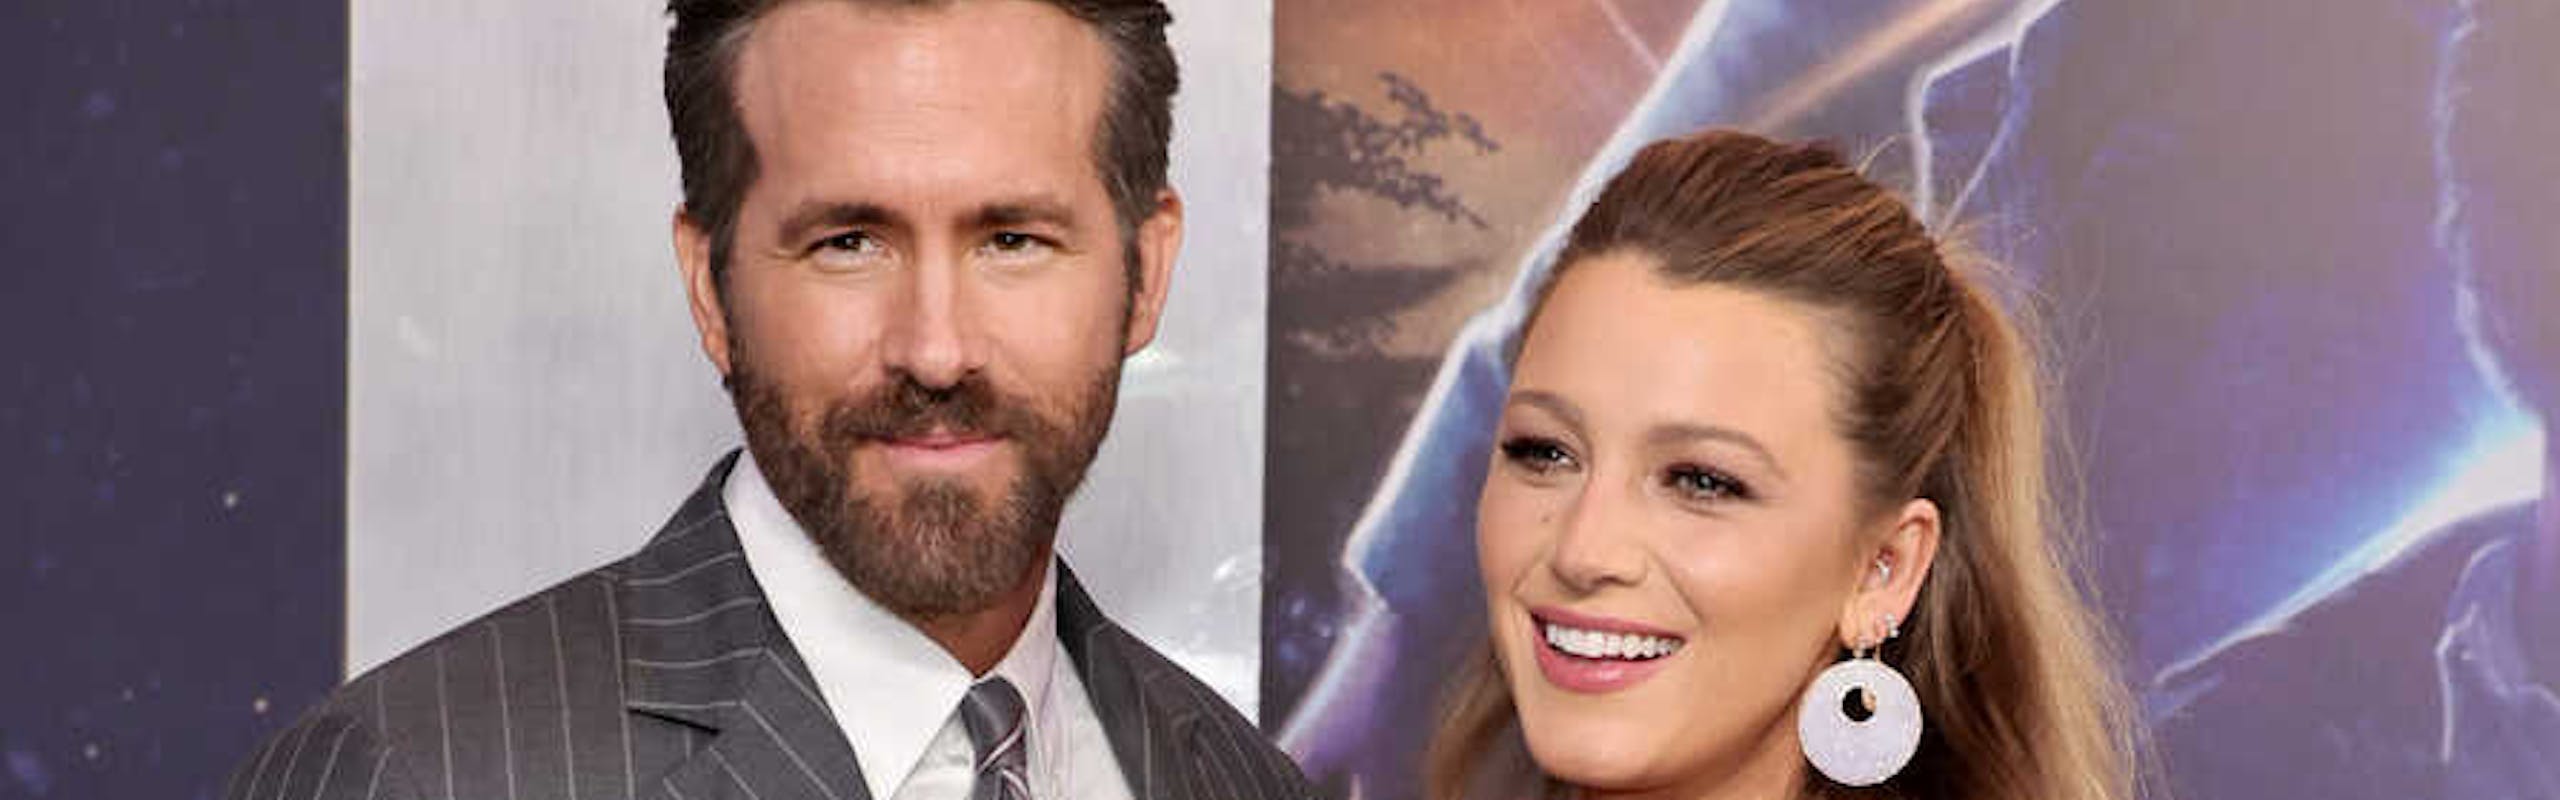 Ryan Reynolds e Blake Lively - Foto: Getty Images